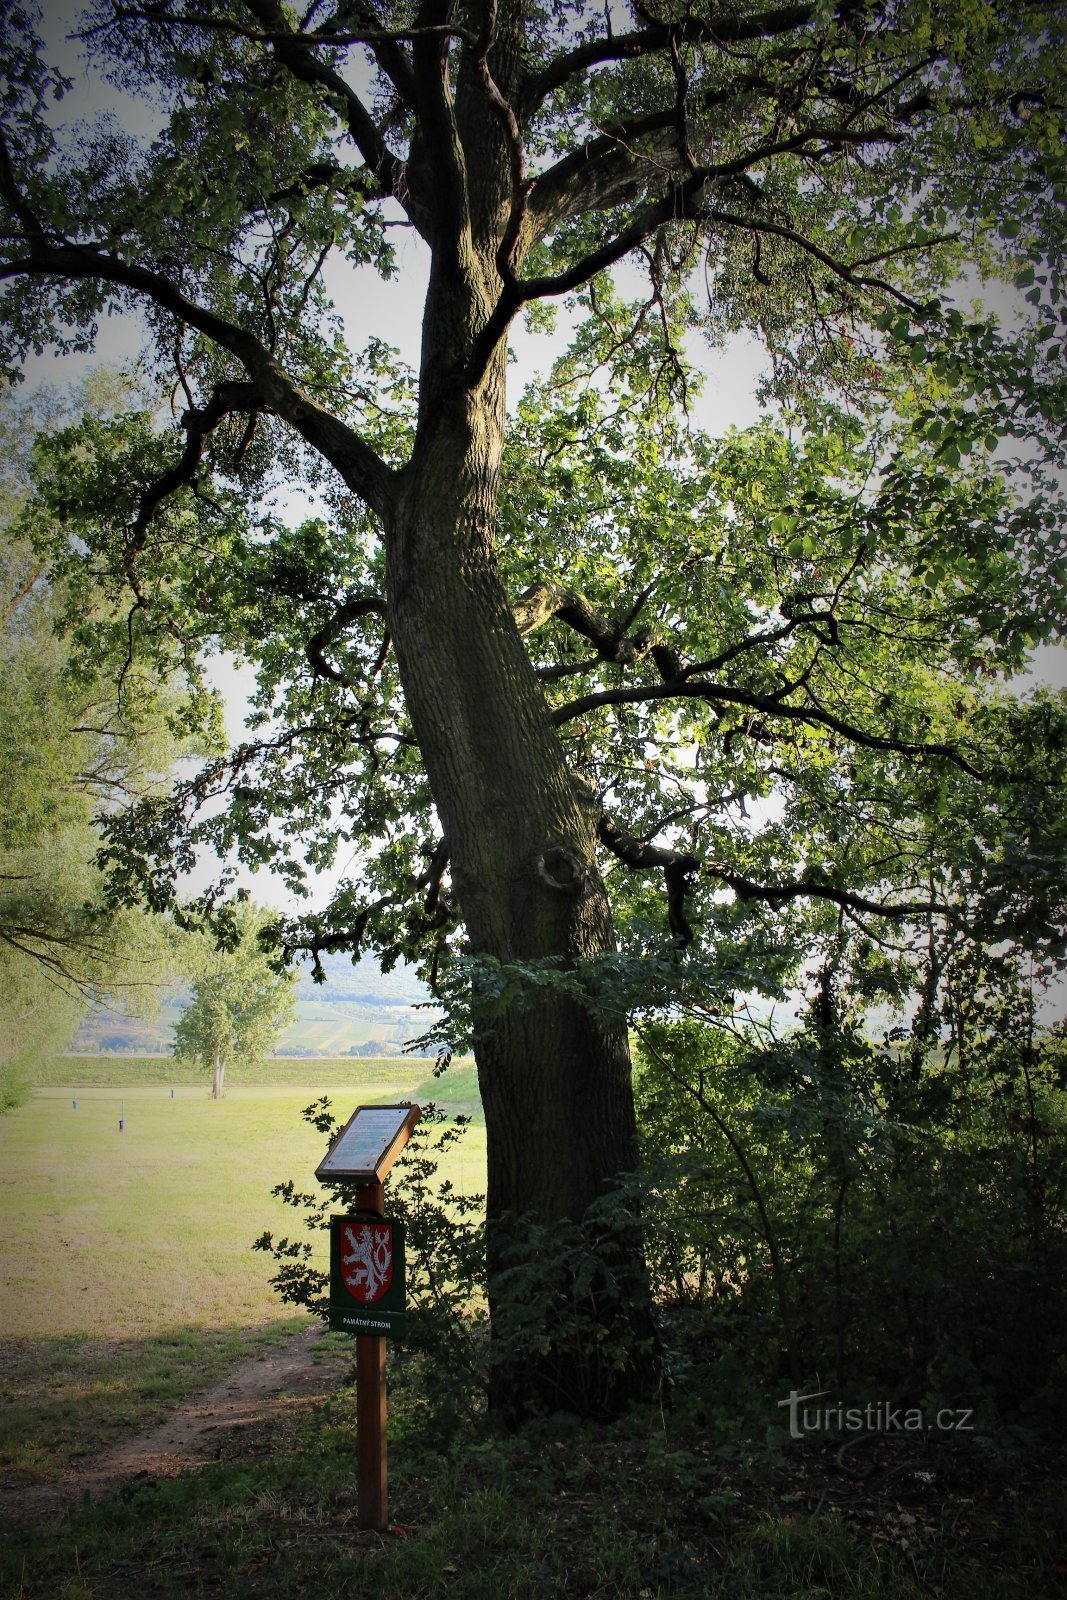 Strachotín - Strachotín oak